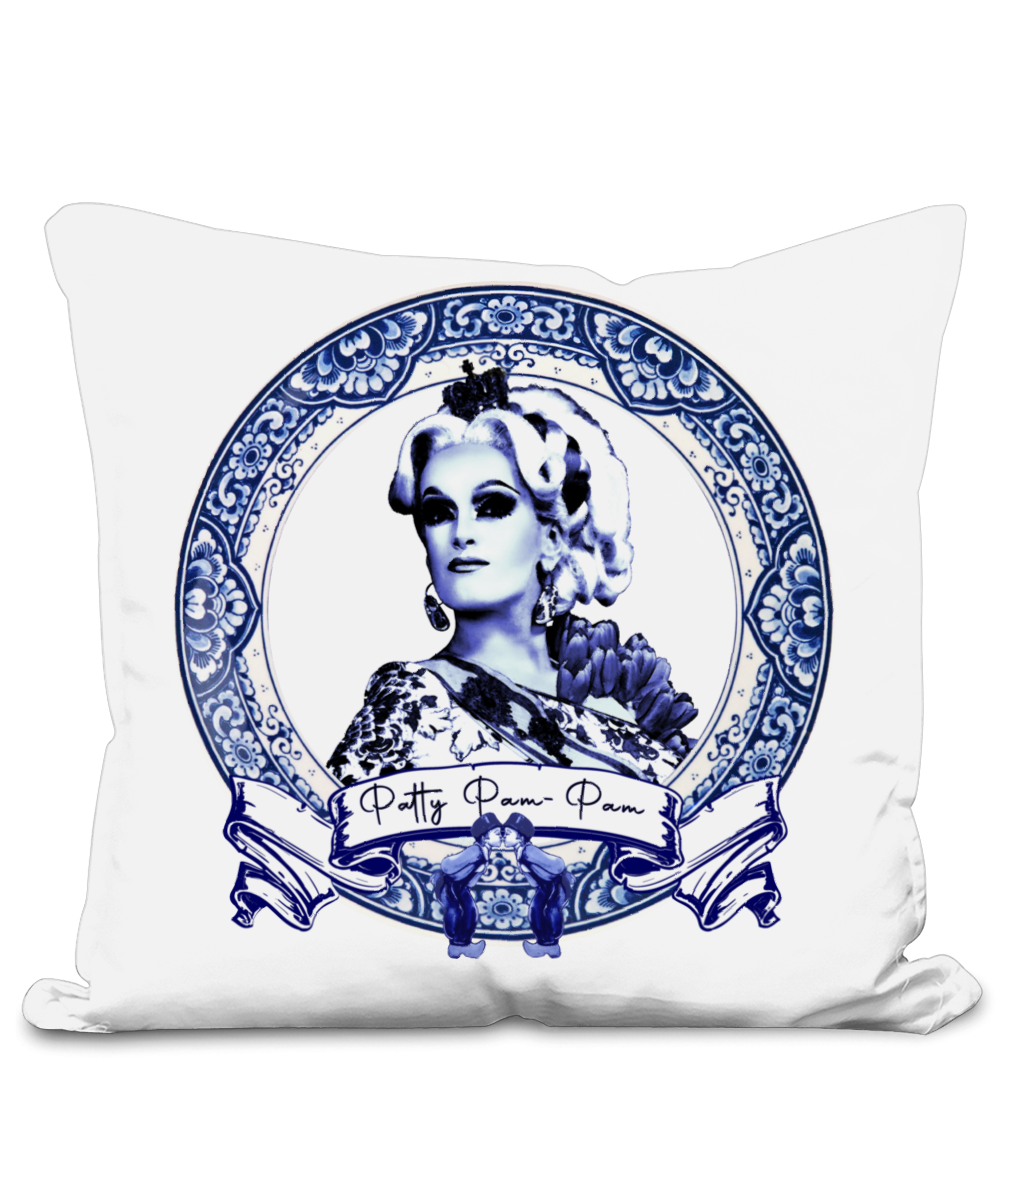 Patty Pam-Pam - Delft Blue Cushion